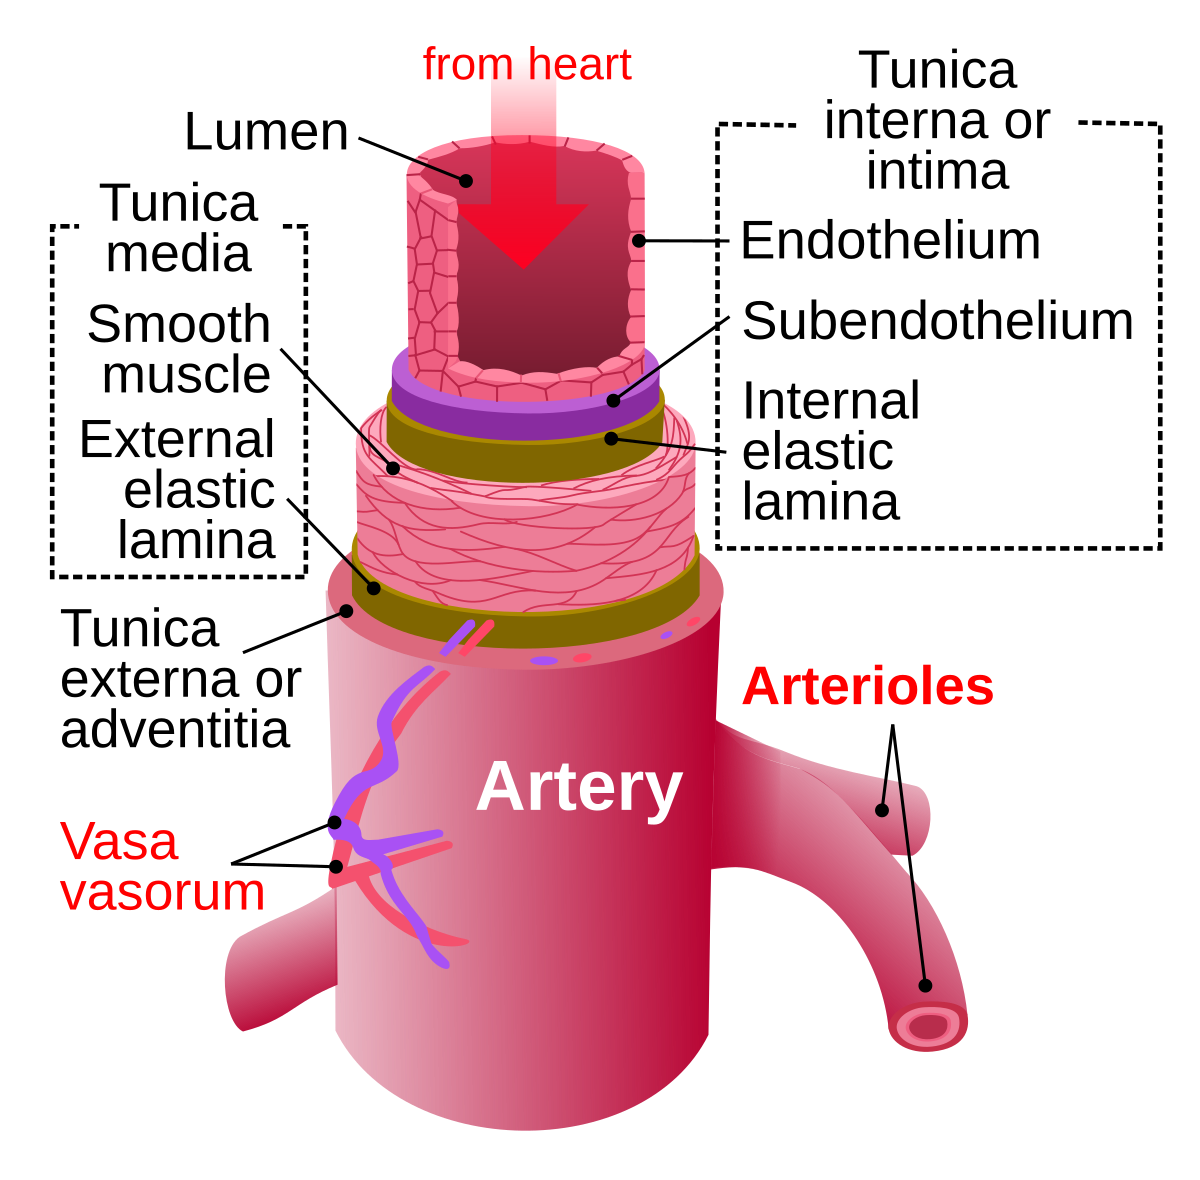 Artery - Wikipedia